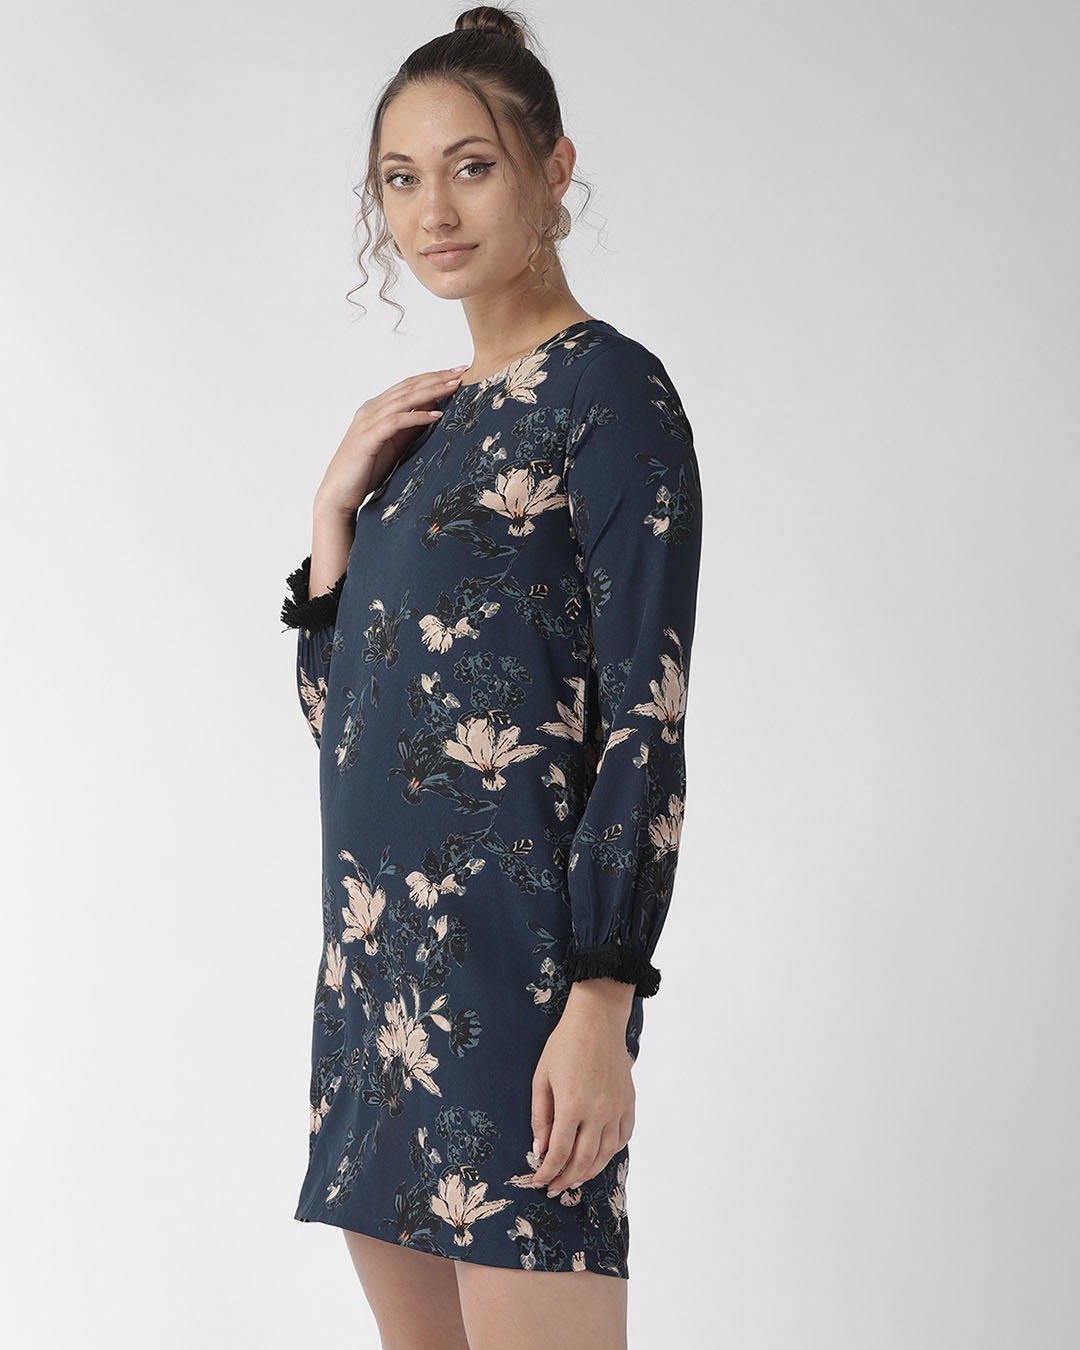 Shop Women's Navy Blue & Beige Floral Printed Sheath Dress-Back